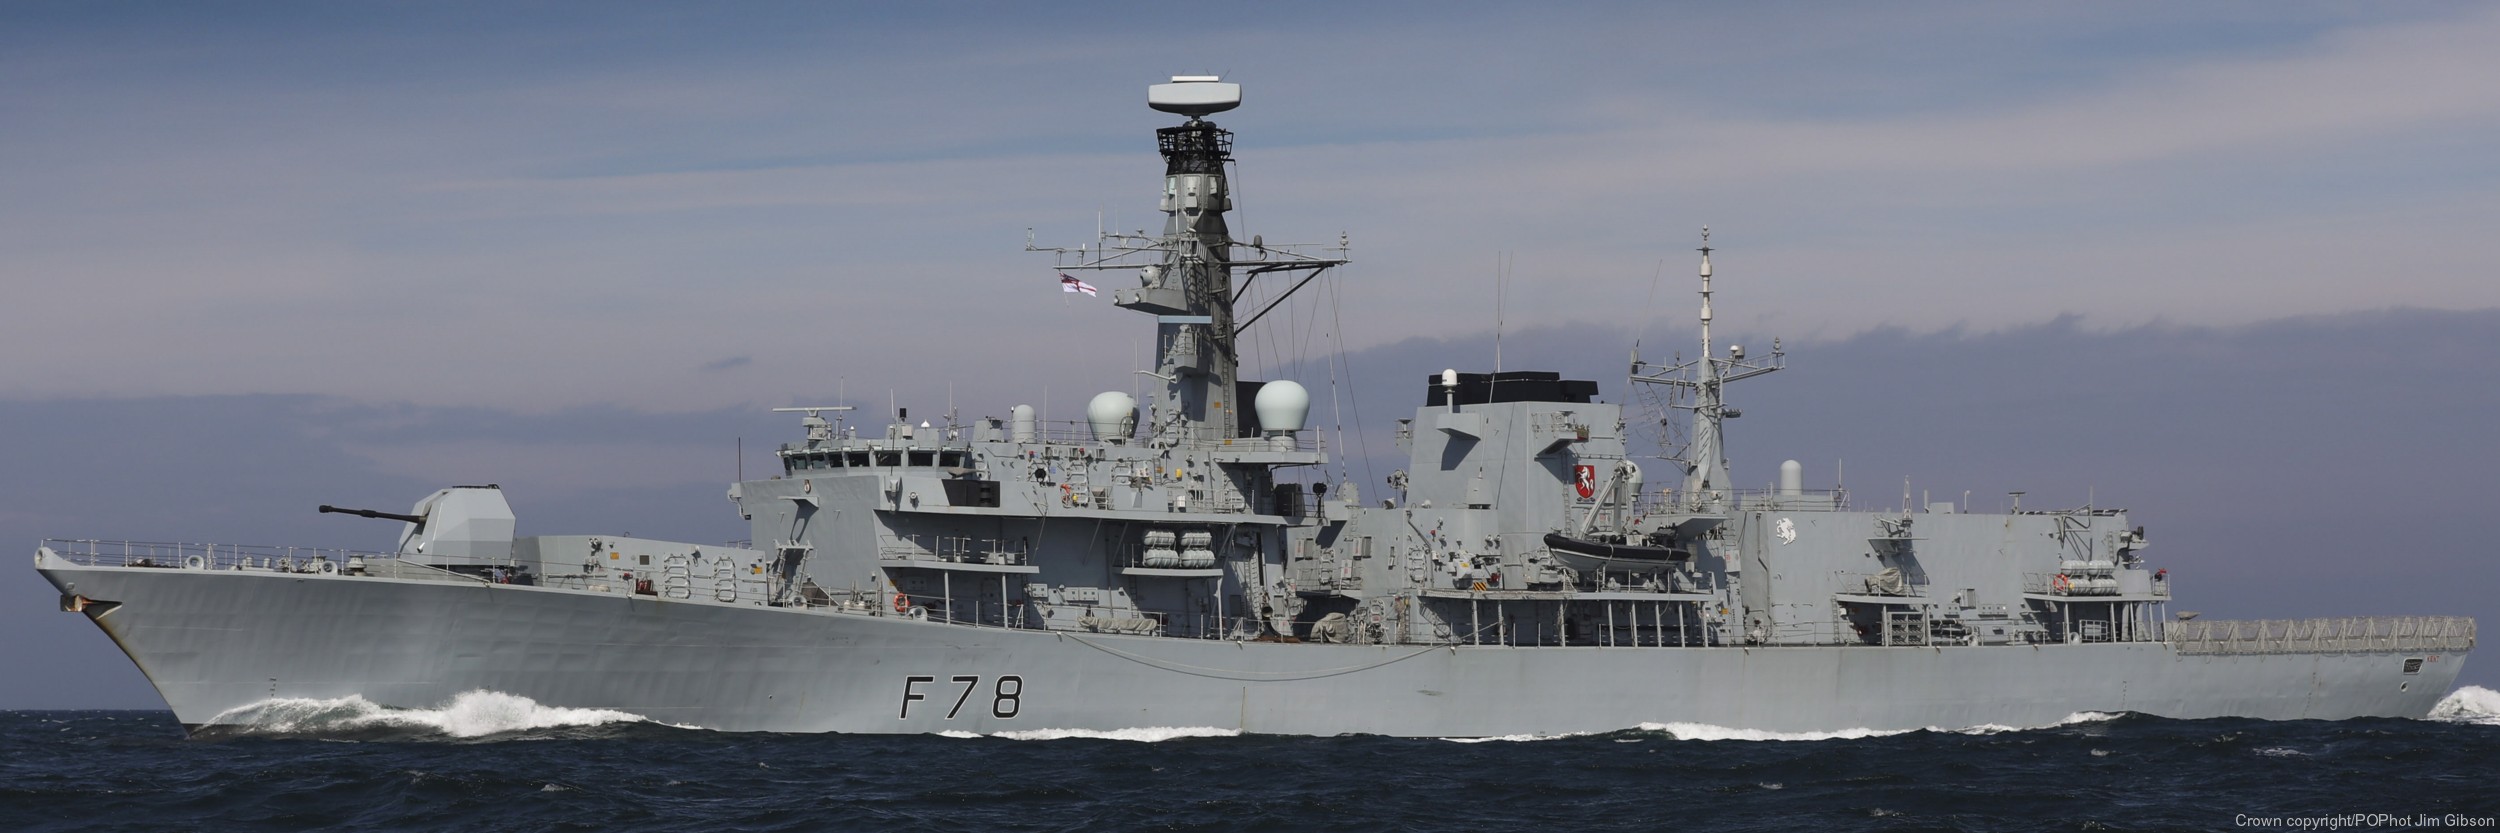 f-78 hms kent type 23 duke class guided missile frigate ffg royal navy 42